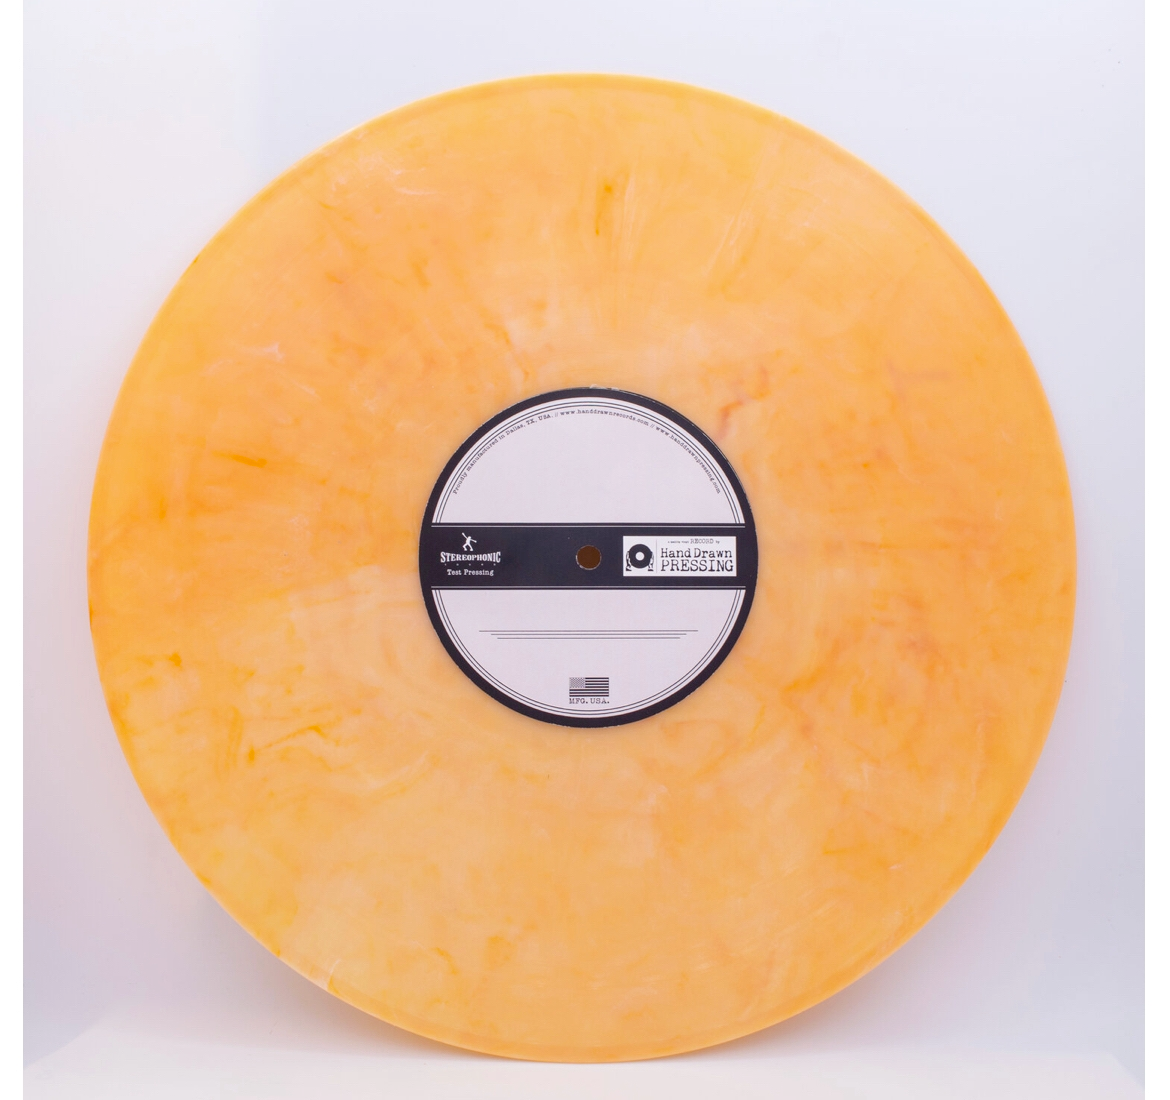 Philip Bowen Old Kanawha (Special Edition Orange Vinyl)